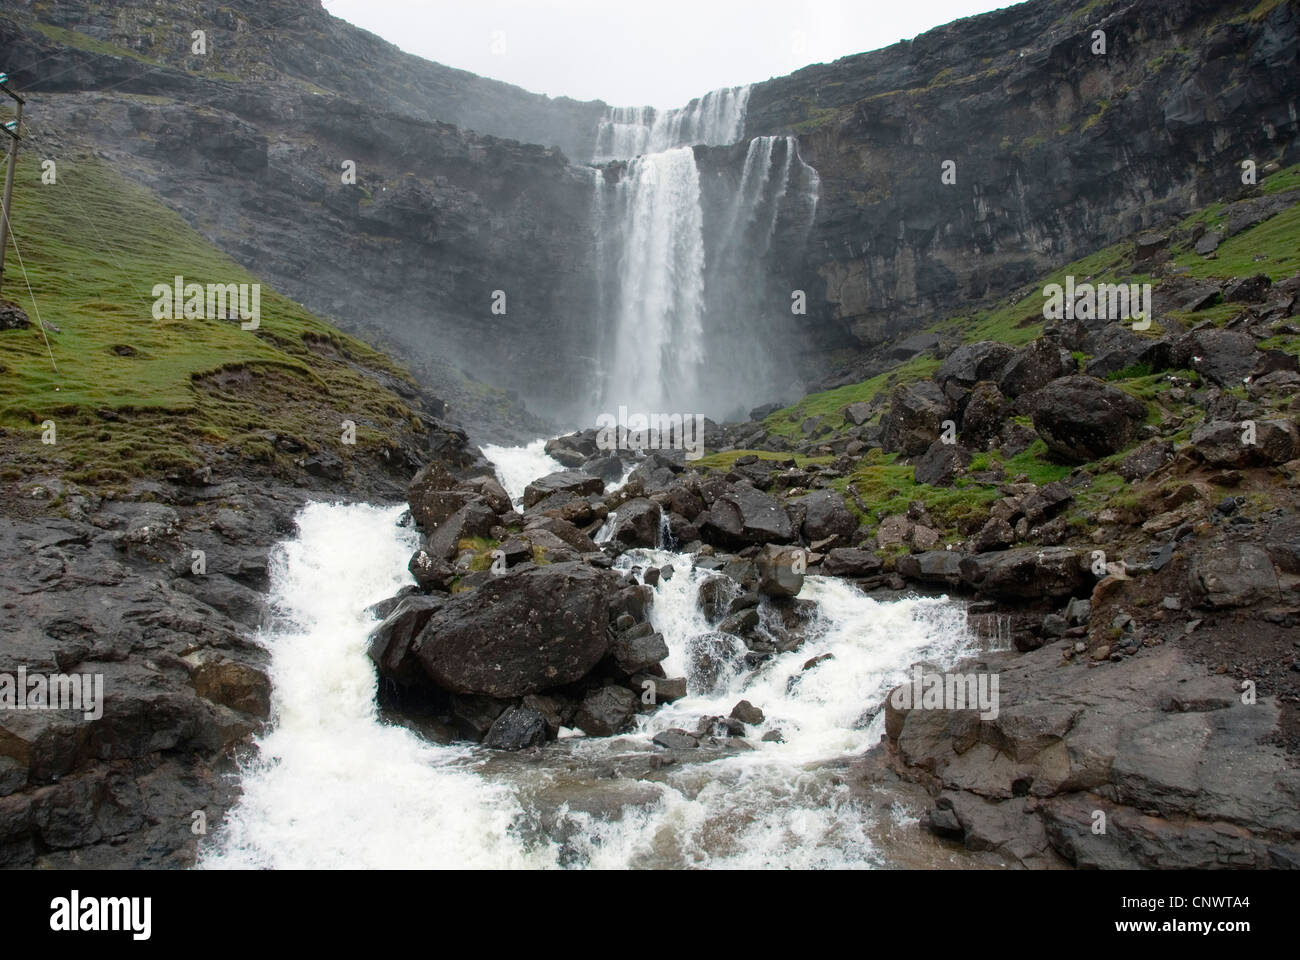 Wasserfall Fossa, der größte Wasserfall der Faeroer, Dänemark, Färöer Inseln Streymoy Stockfoto